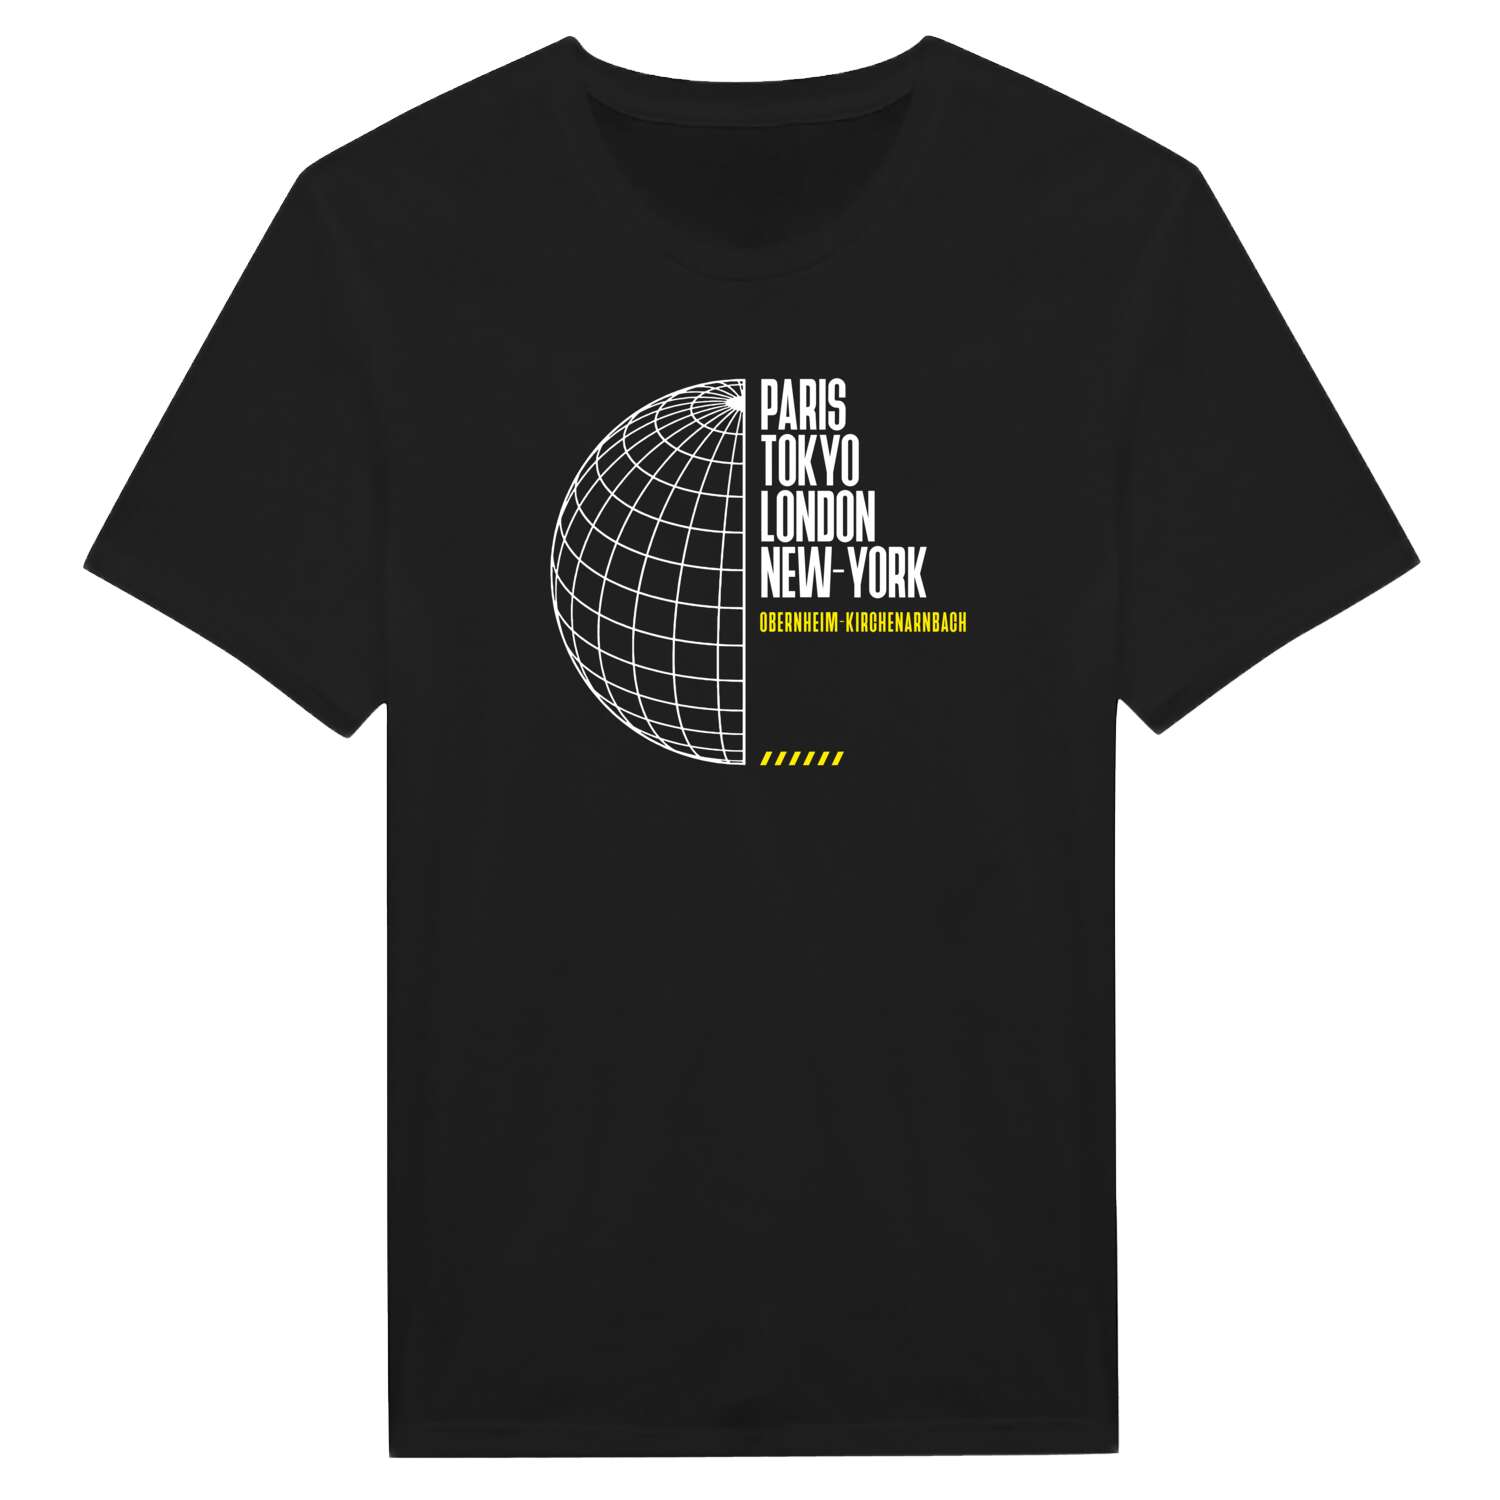 Obernheim-Kirchenarnbach T-Shirt »Paris Tokyo London«